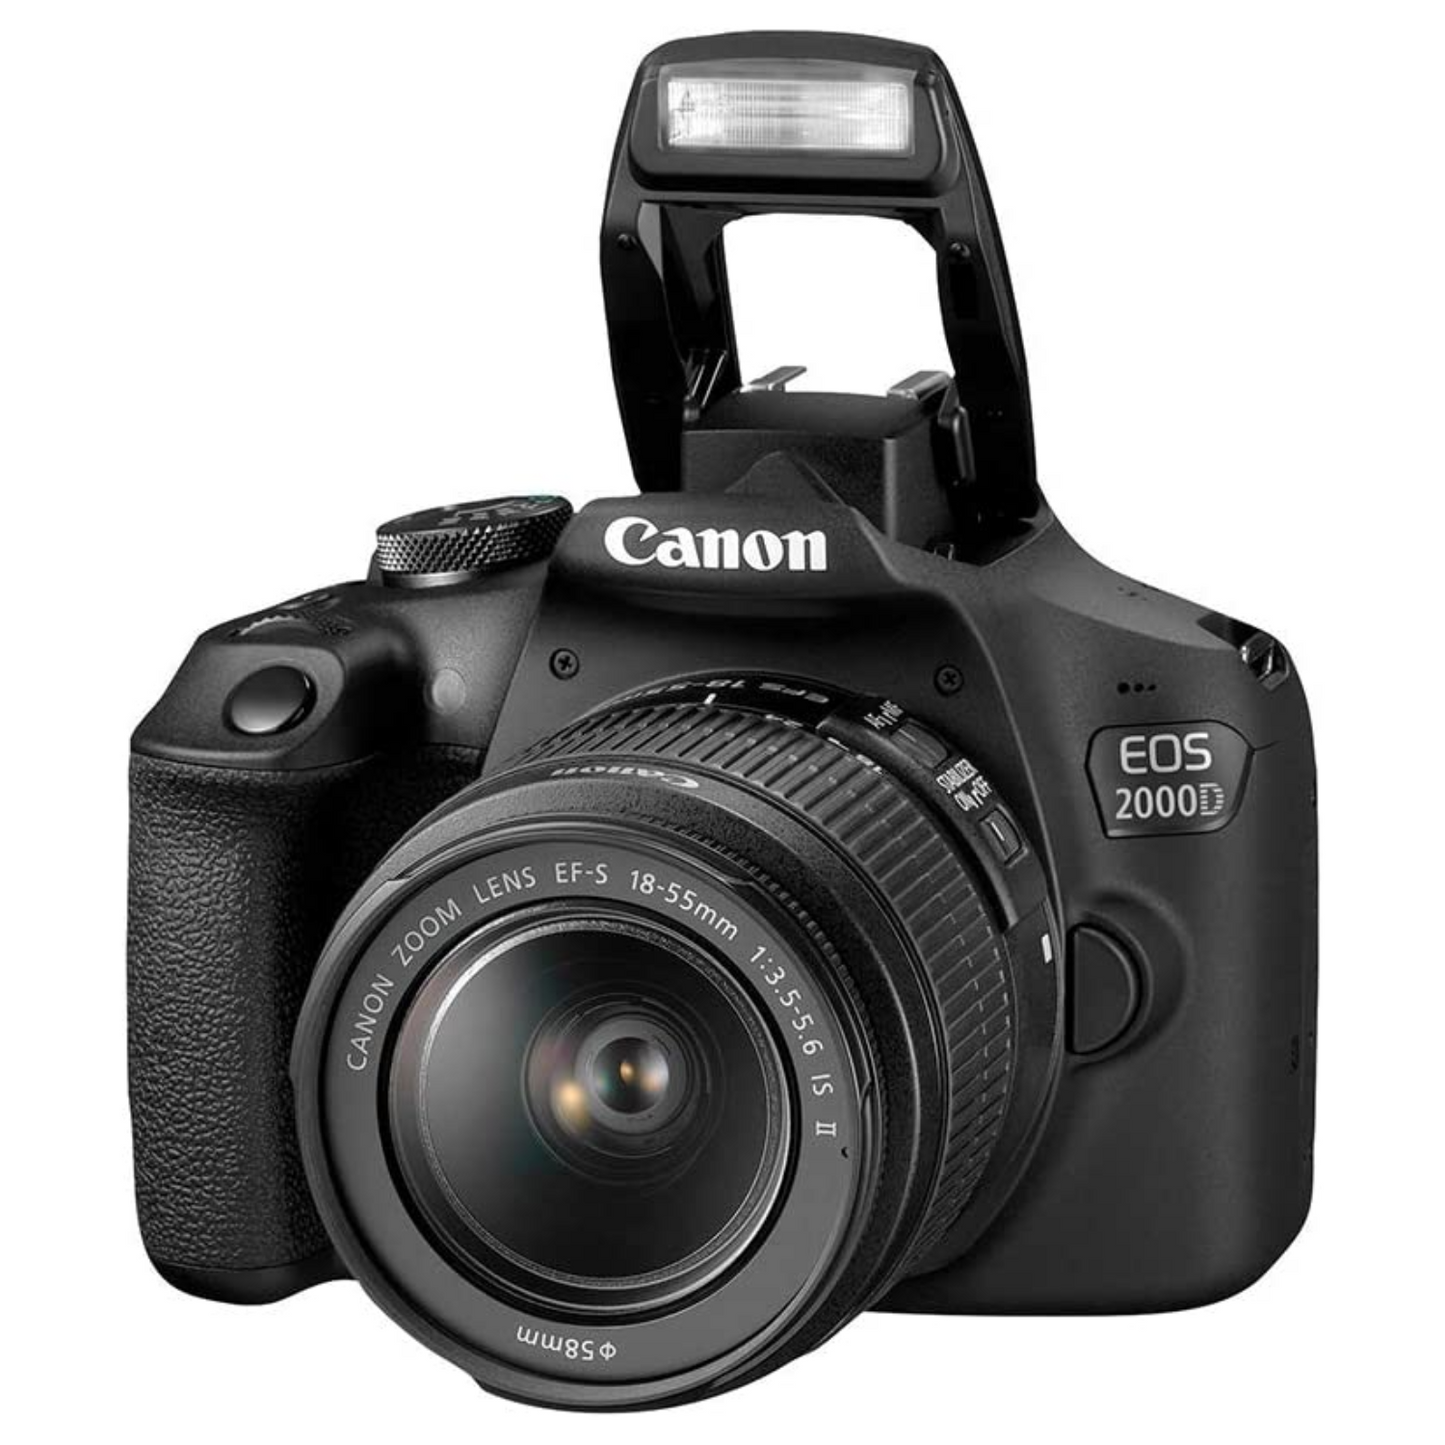 Canon EOS 2000D DSLR Camera with 18-55mm Lens Kit, Black